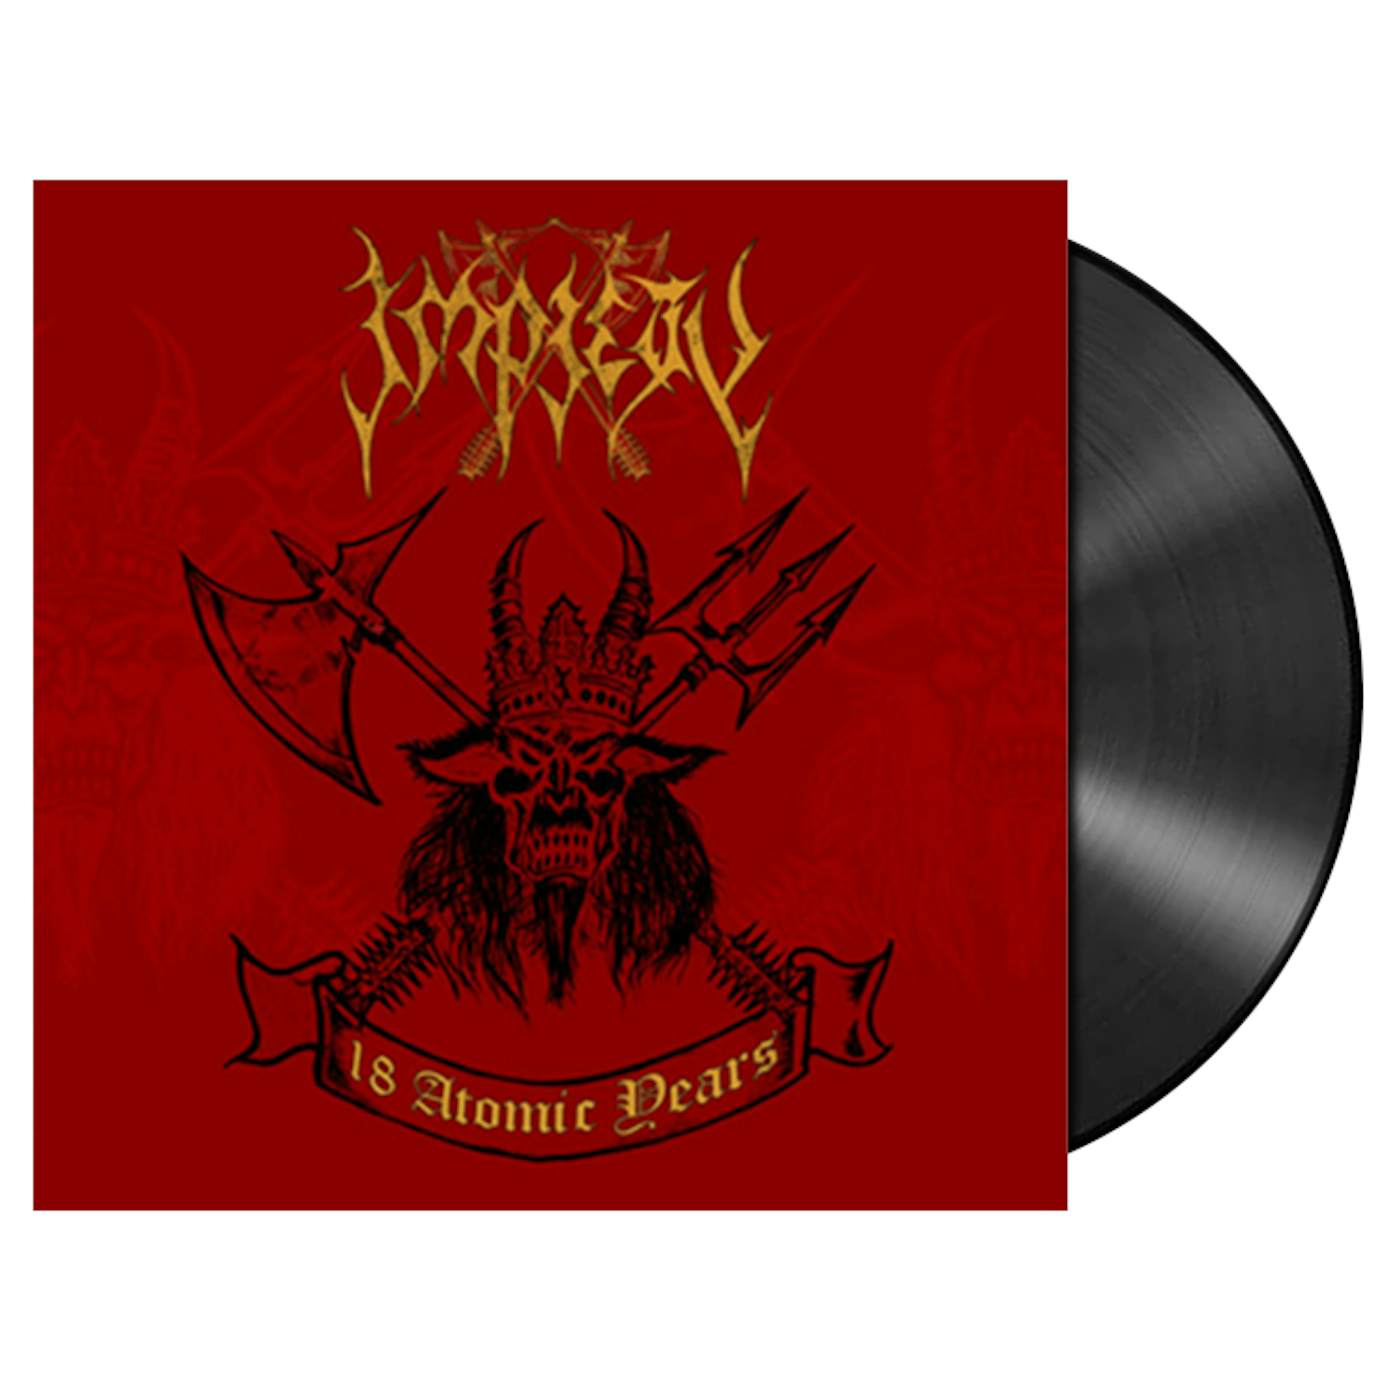 IMPIETY - '18 Atomic Years' Black & Picture Disc 2xLP (Vinyl)